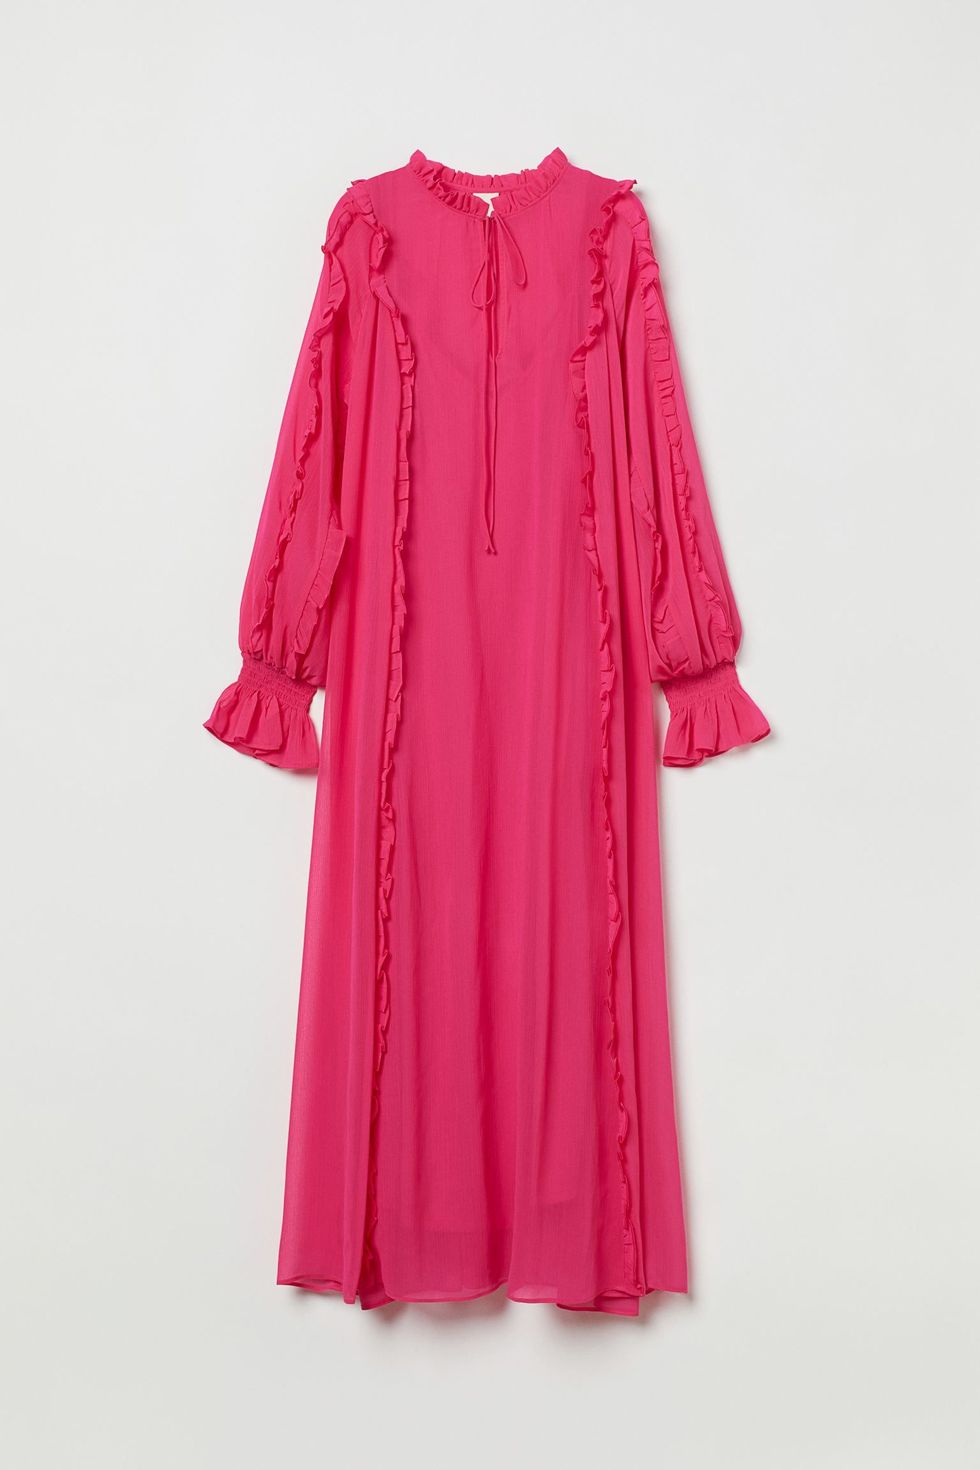 H&M se inspira en el vestido rosa de la firma Balenciaga.